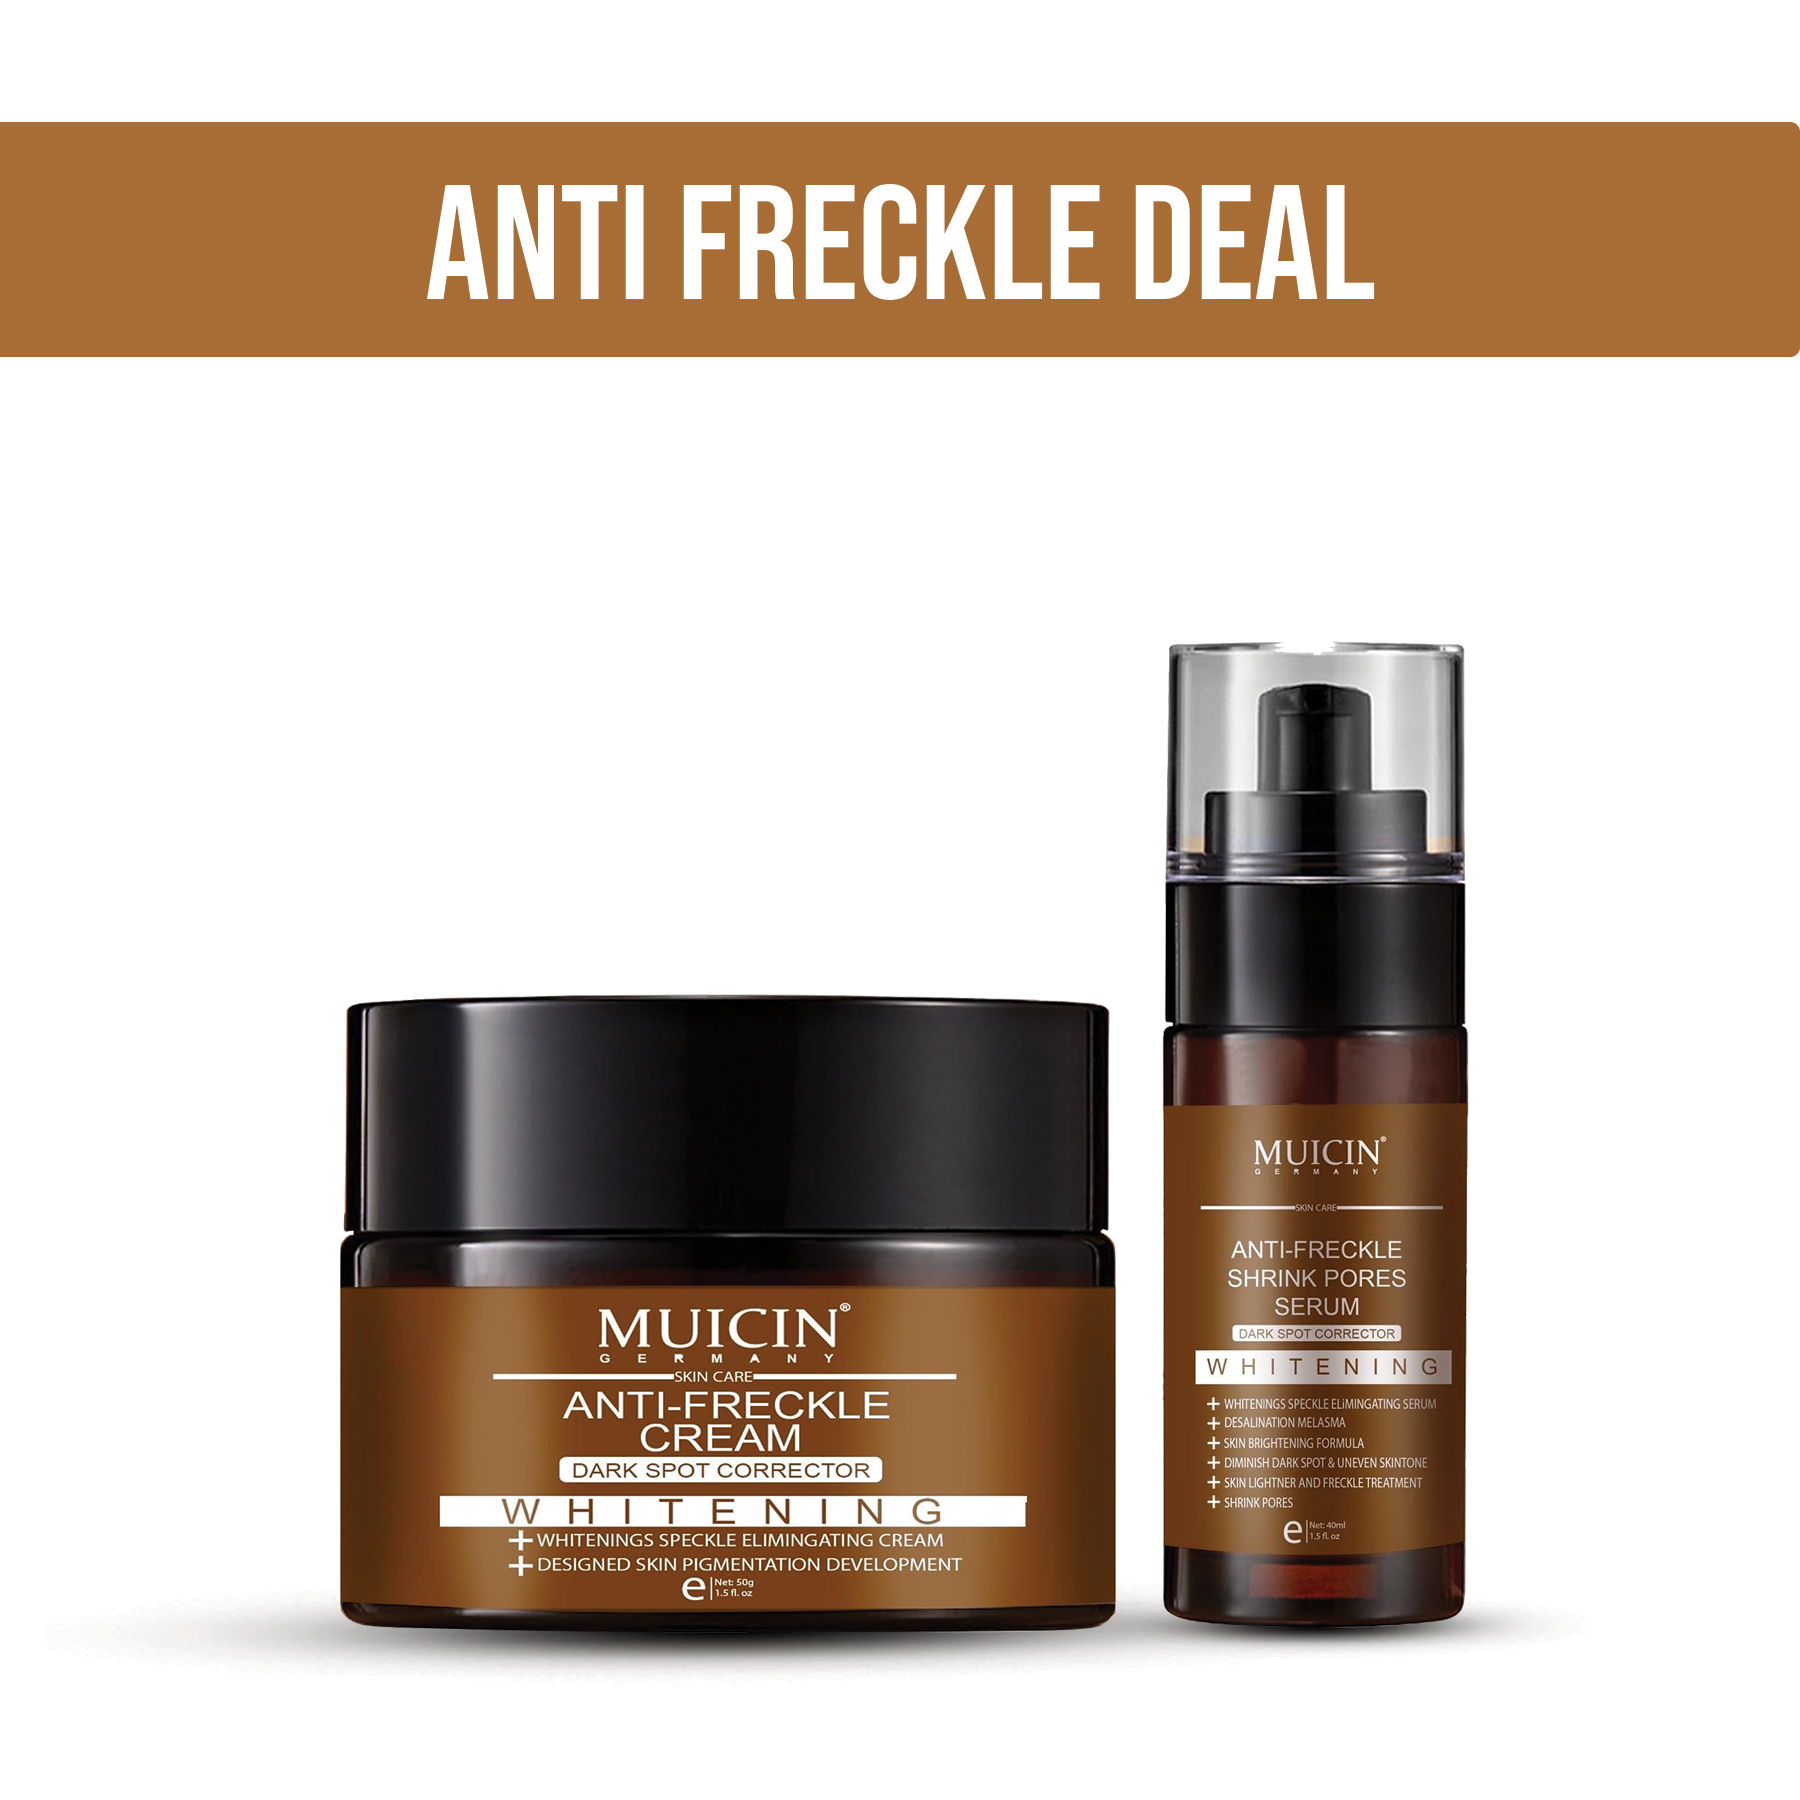 MUICIN - Anti-Freckle Deal